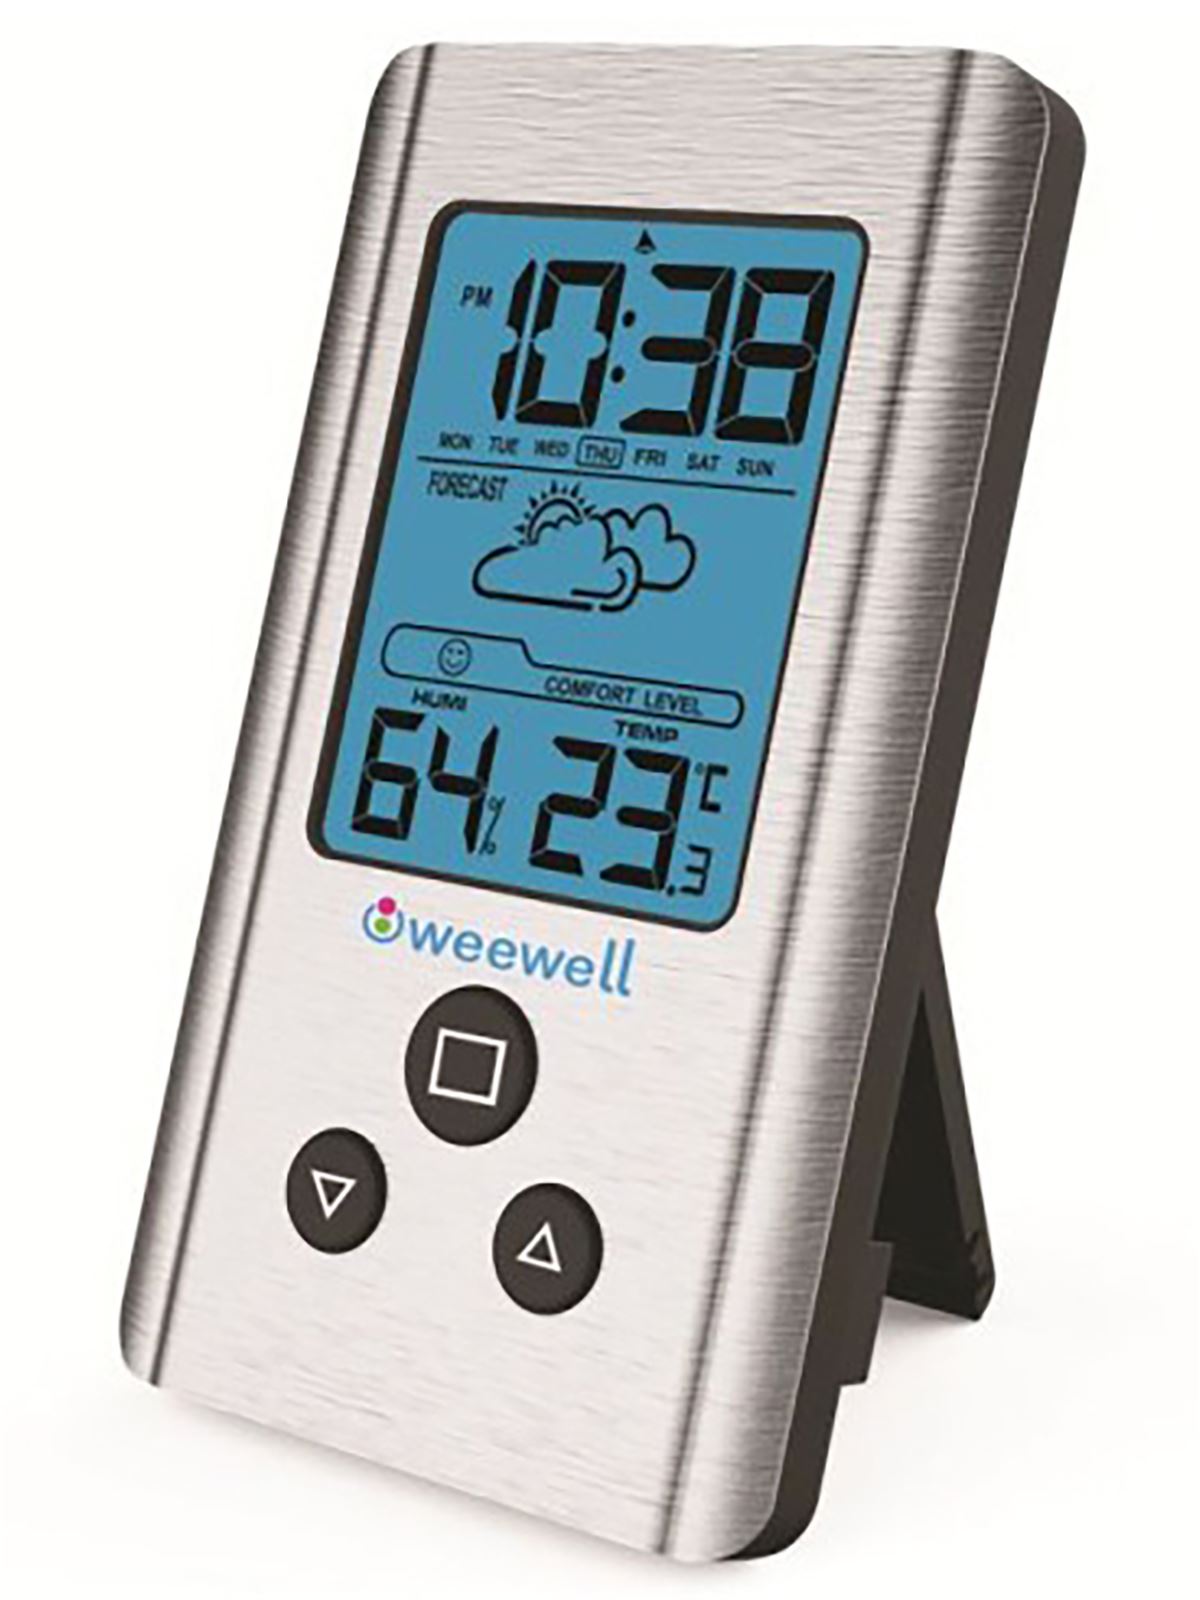 Weewell Whm150 Higro Termometre